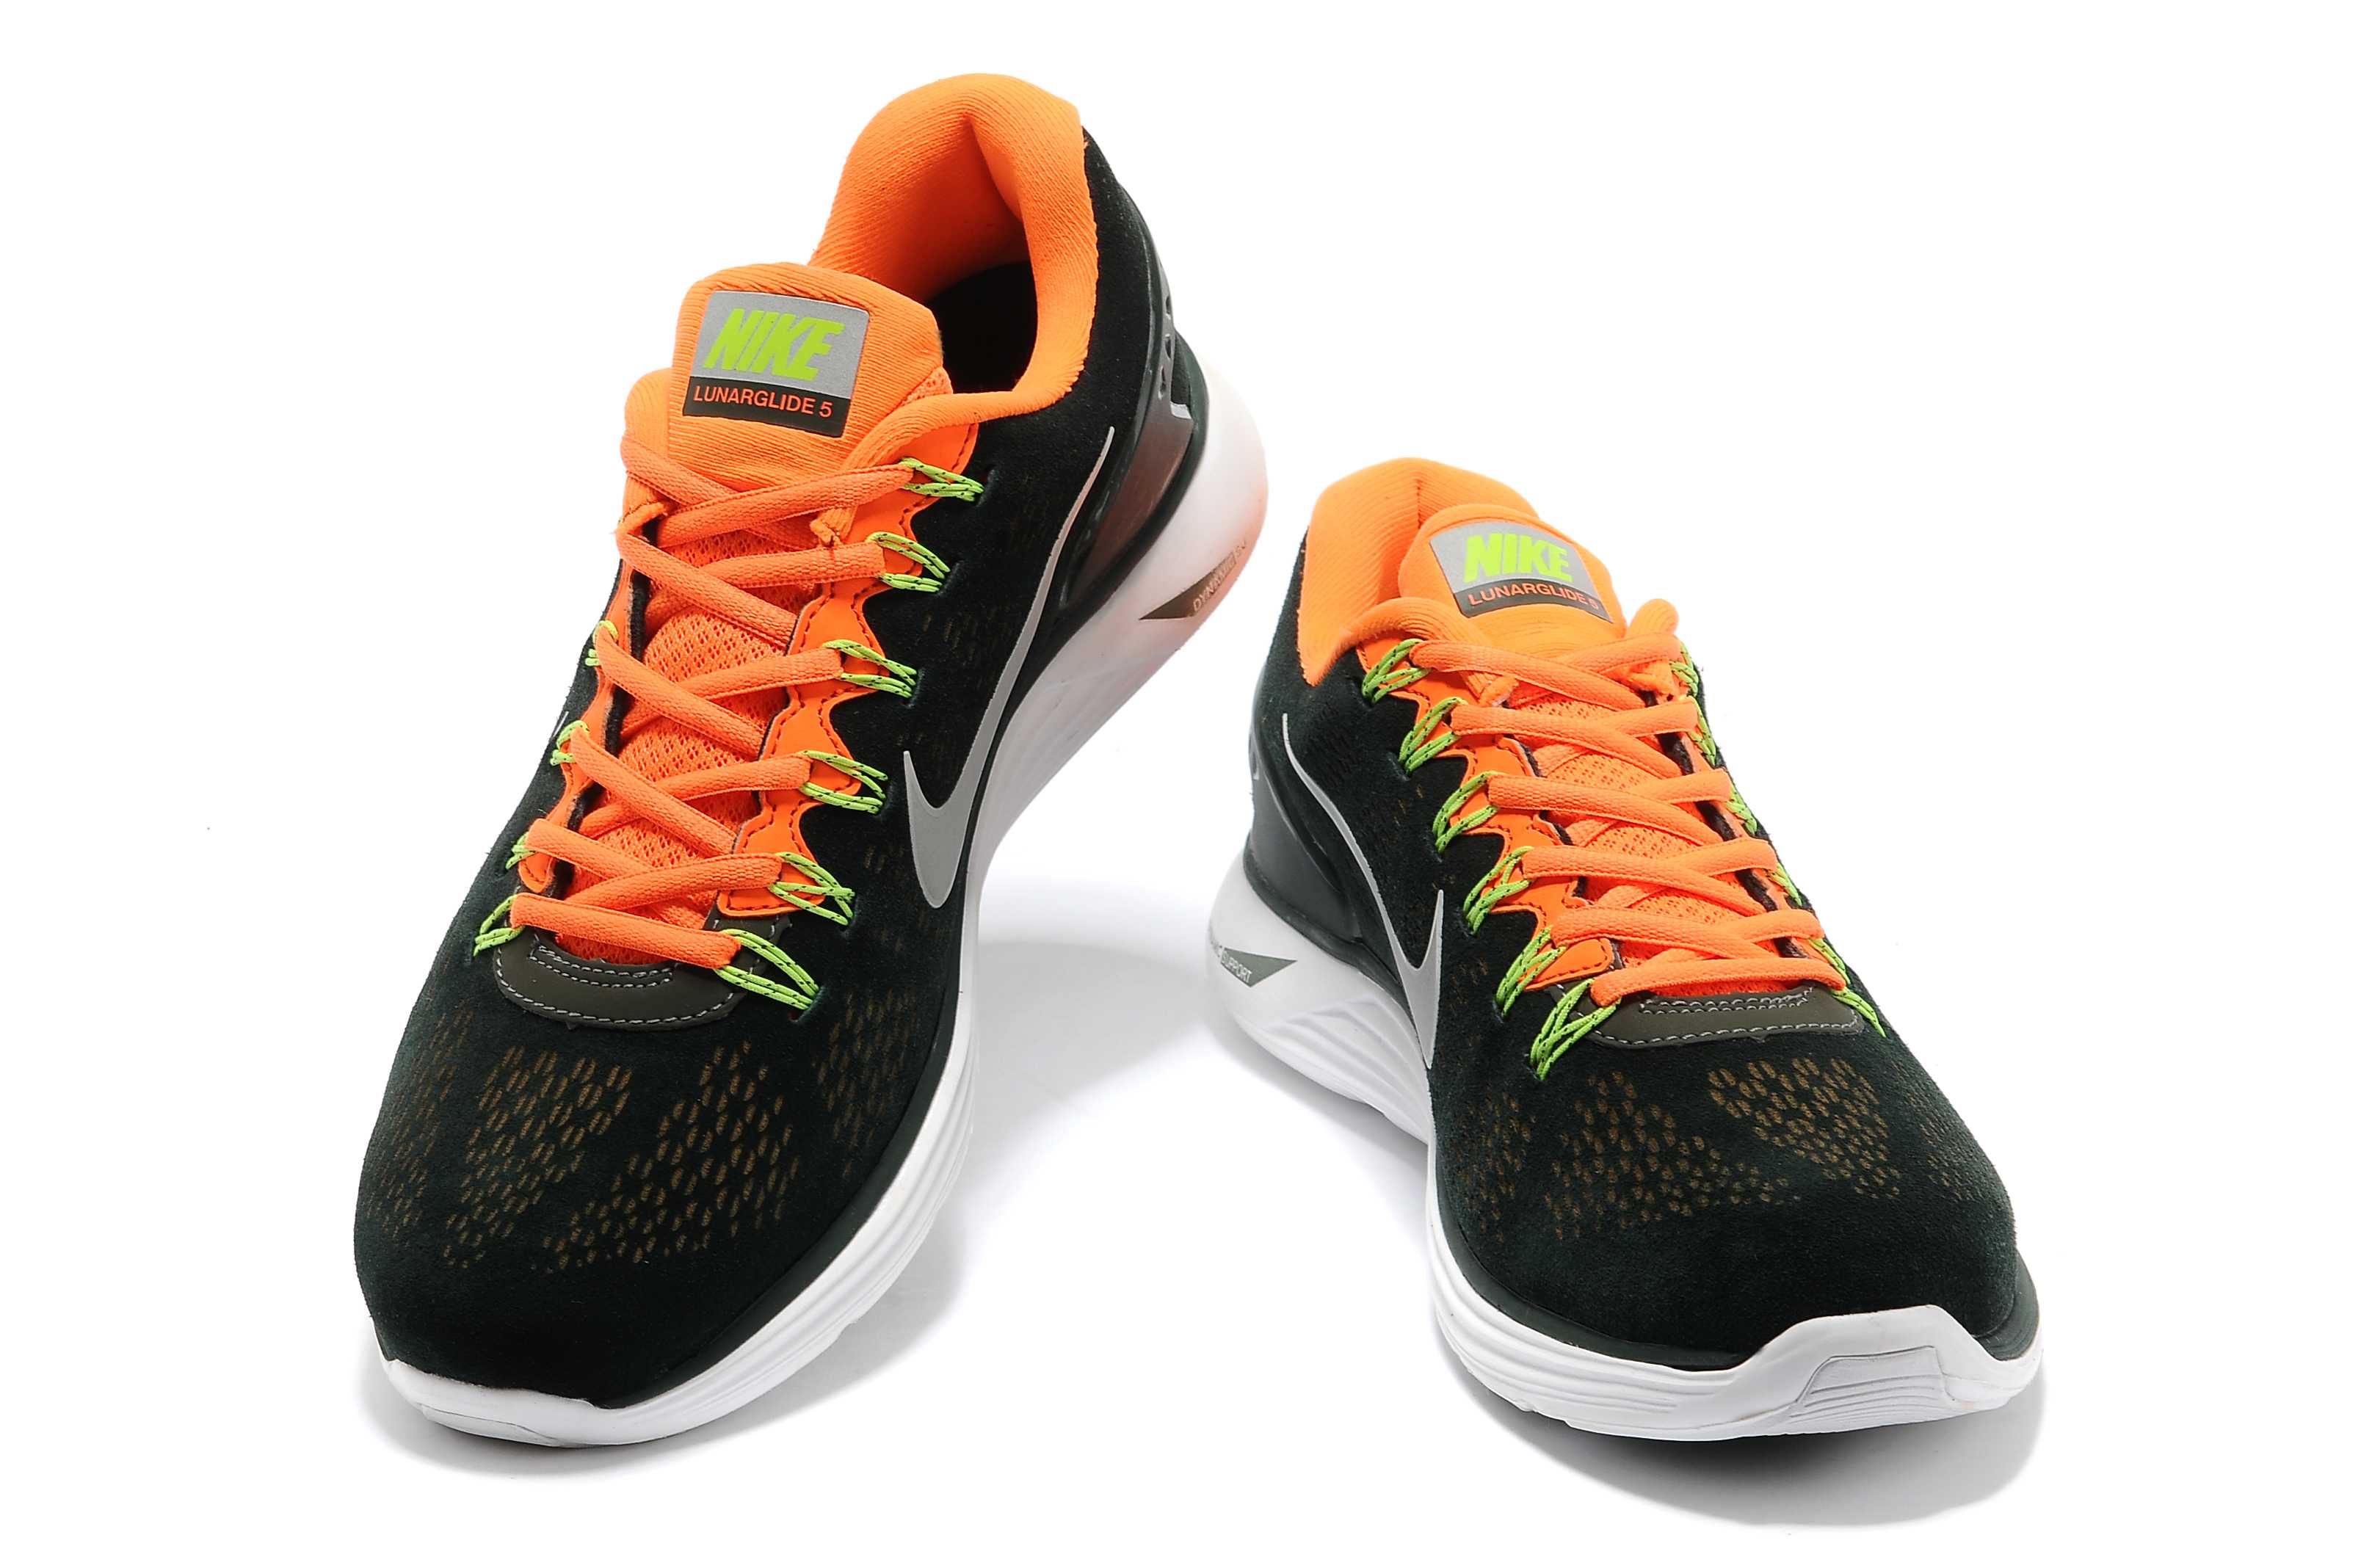 Nike Lunar 5.5 Fur nike lunar chaussures nouveau style